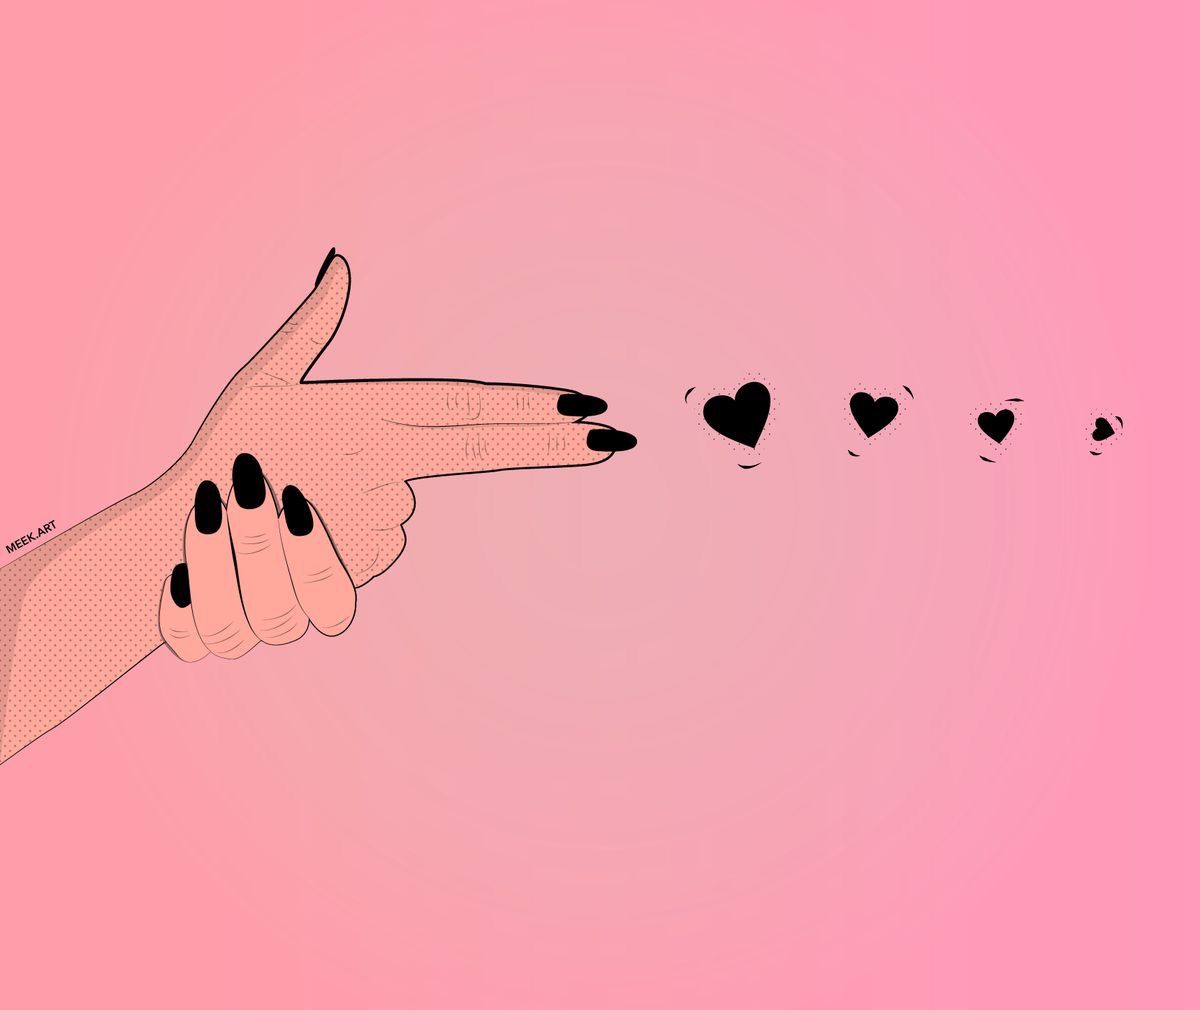 fb wallpaper,pink,hand,finger,illustration,wing